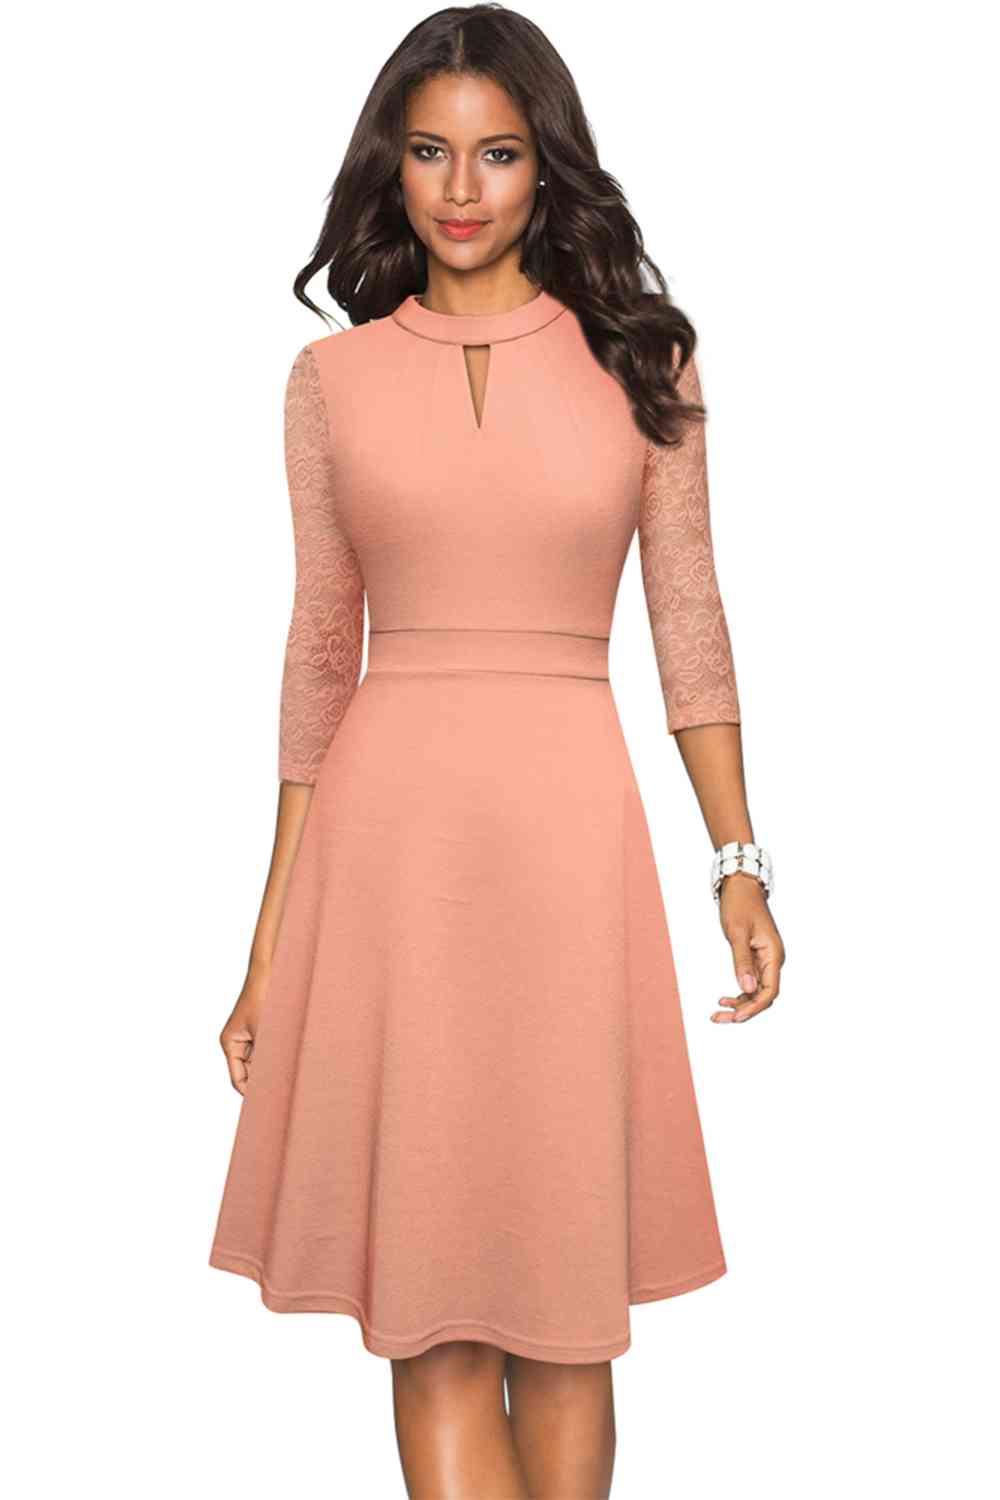 Round Neck Three-Quater Sleeve Cutout Dress - Peach / S - All Dresses - Dresses - 16 - 2024